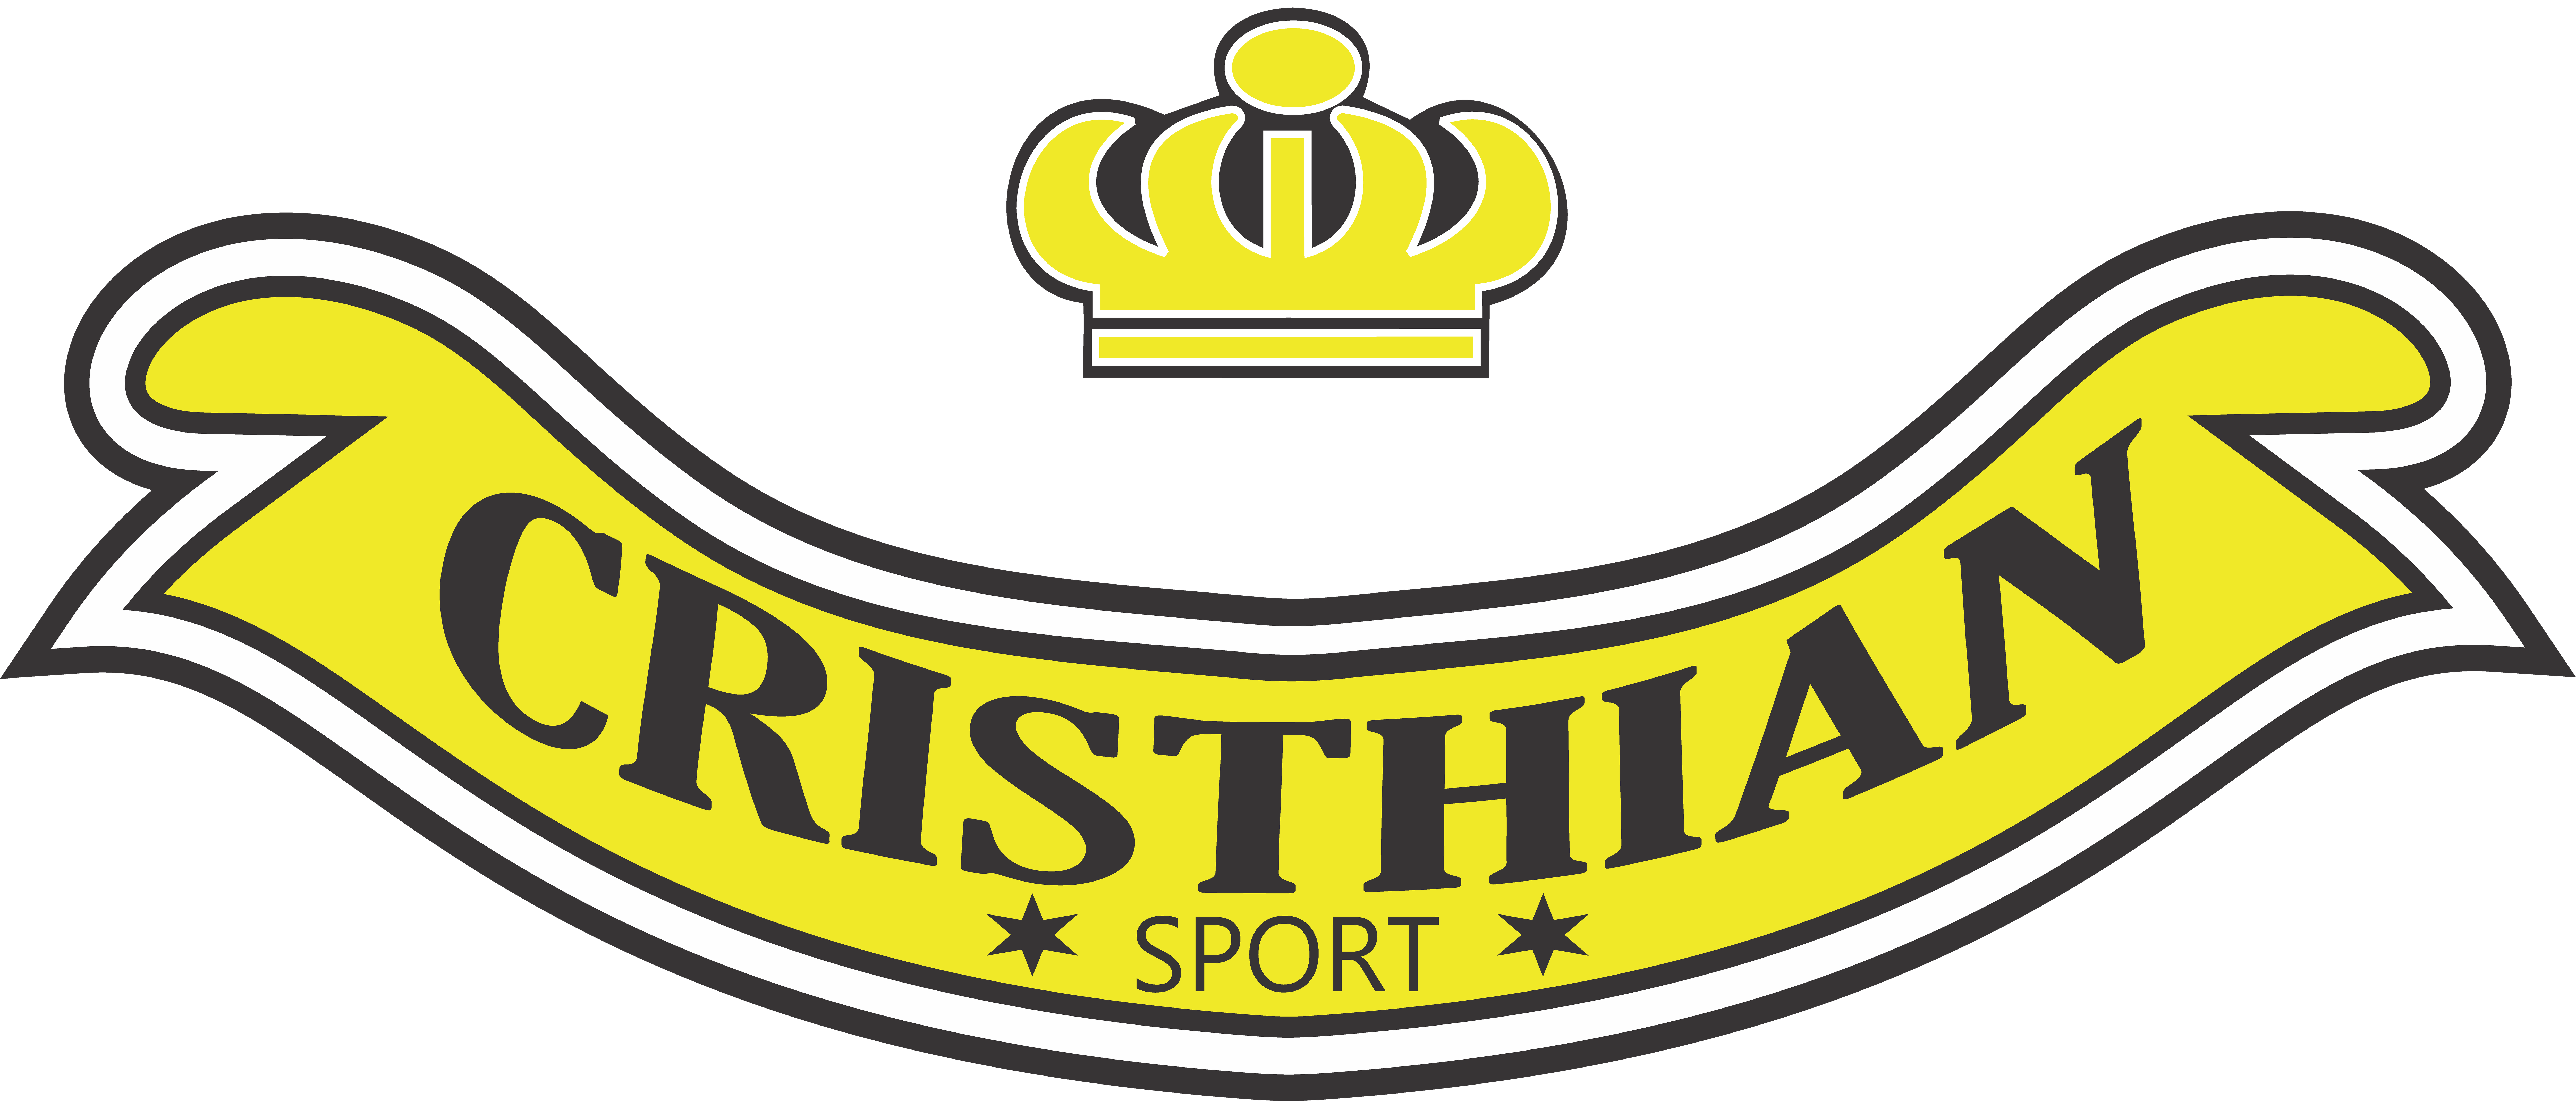 cristhian sport logo